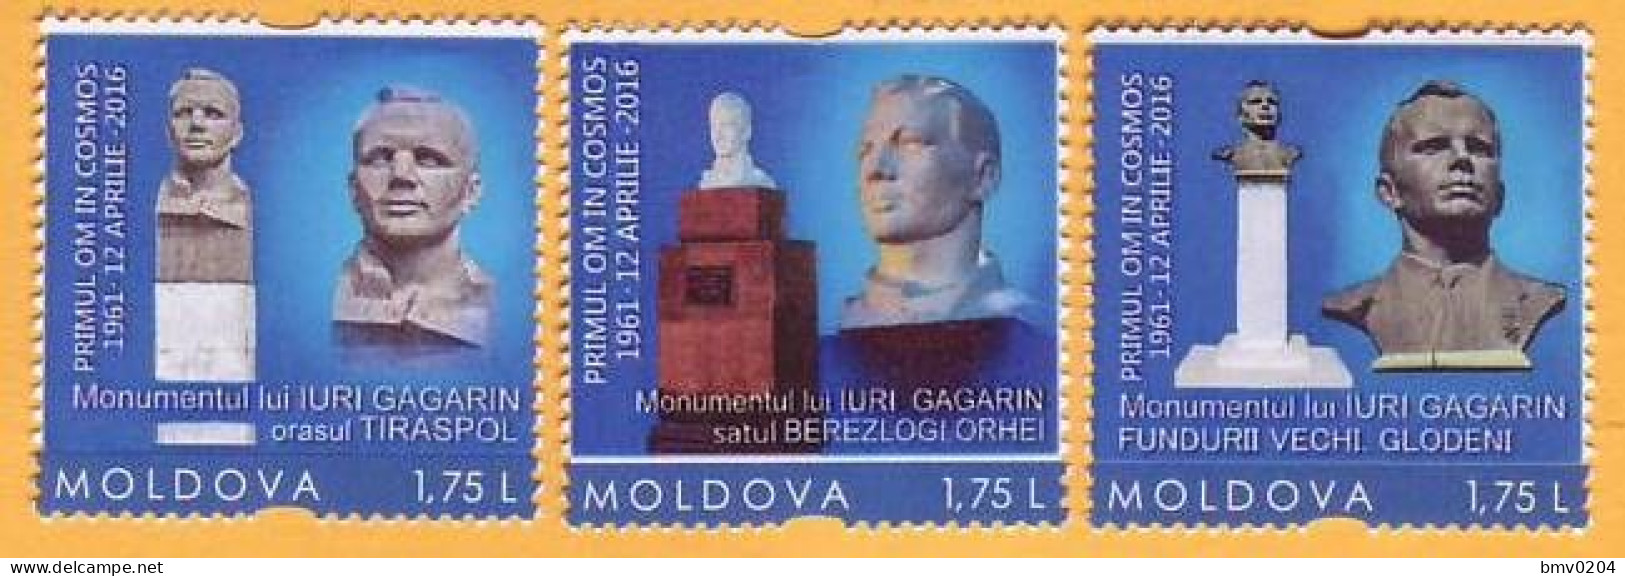 2016 Moldova Moldavie Moldau  Russia  Yuri Gagarin. Personalized Stamps. Space. Monument To Gagarin 3v Mint. - Moldavie